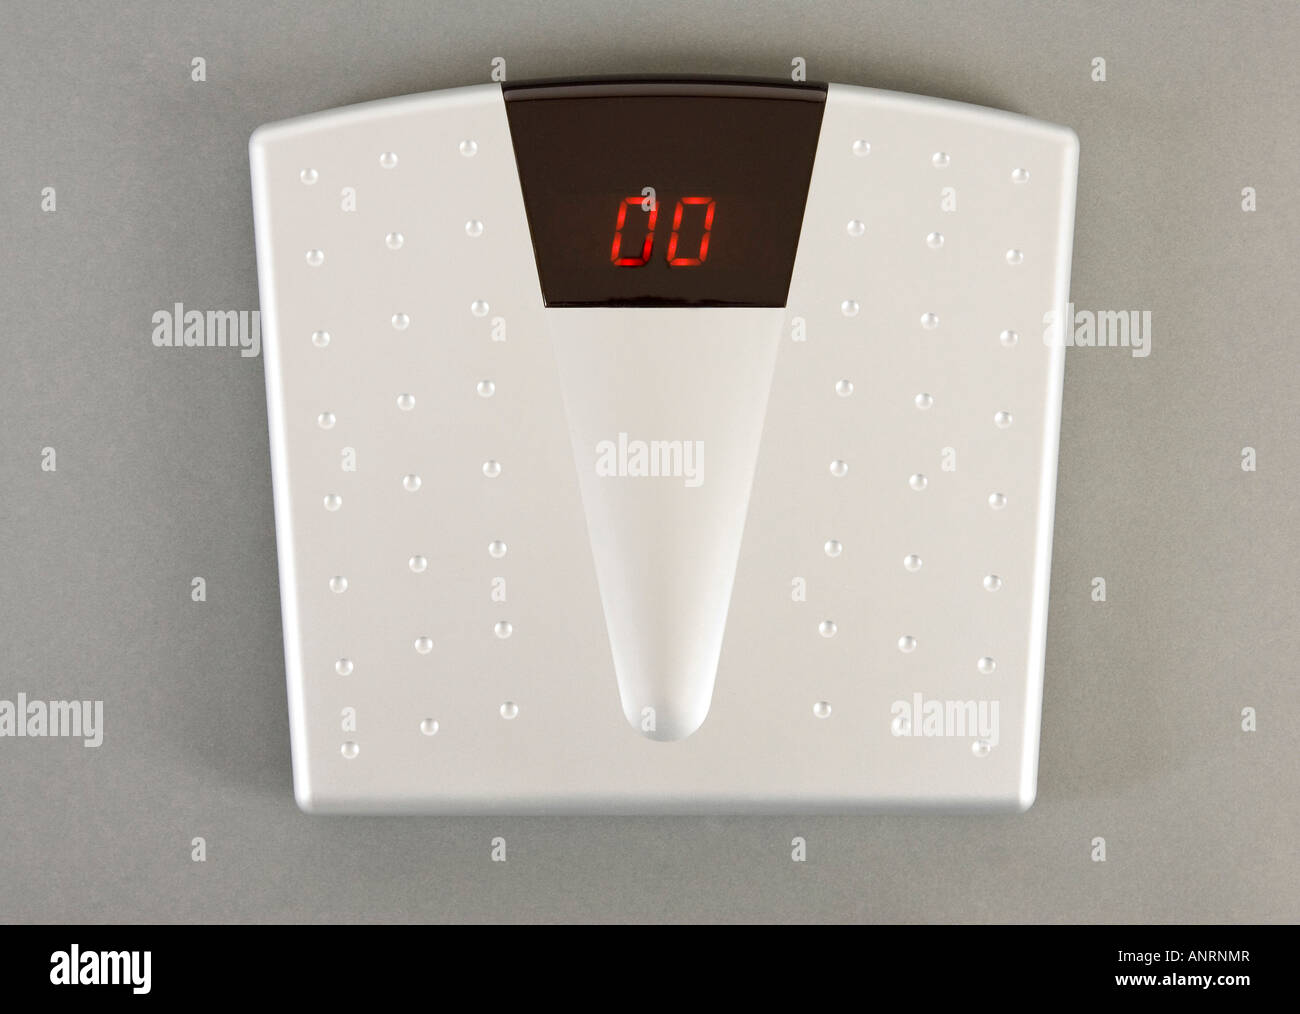 electronic digital bathroom scales Stock Photo